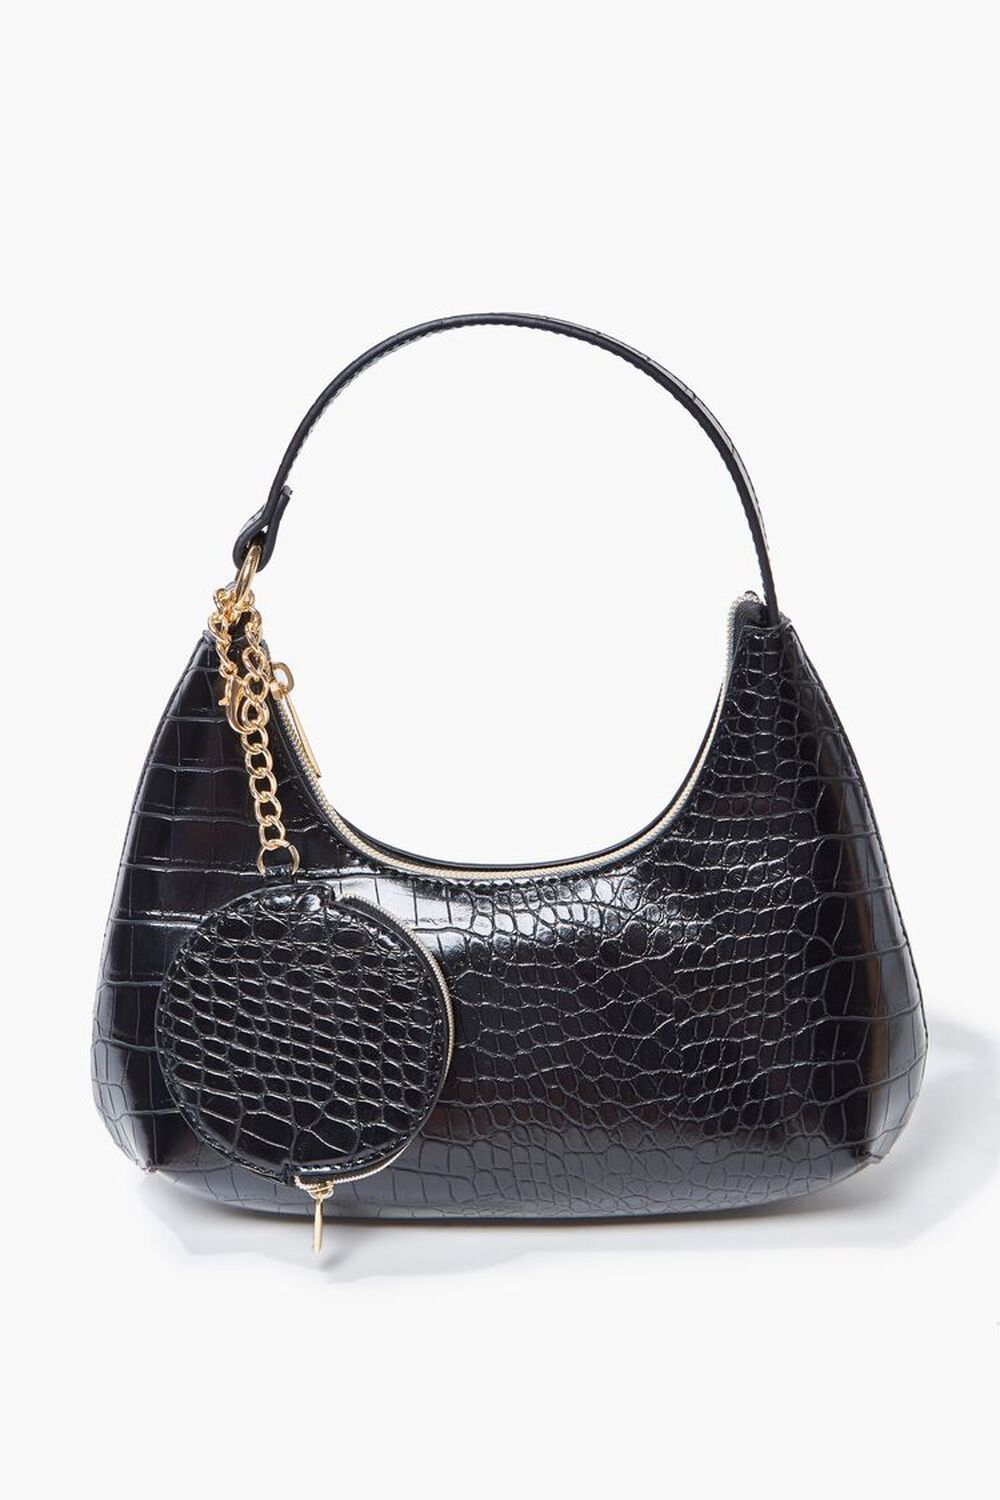 Faux Croc Leather Shoulder Bag, image 1